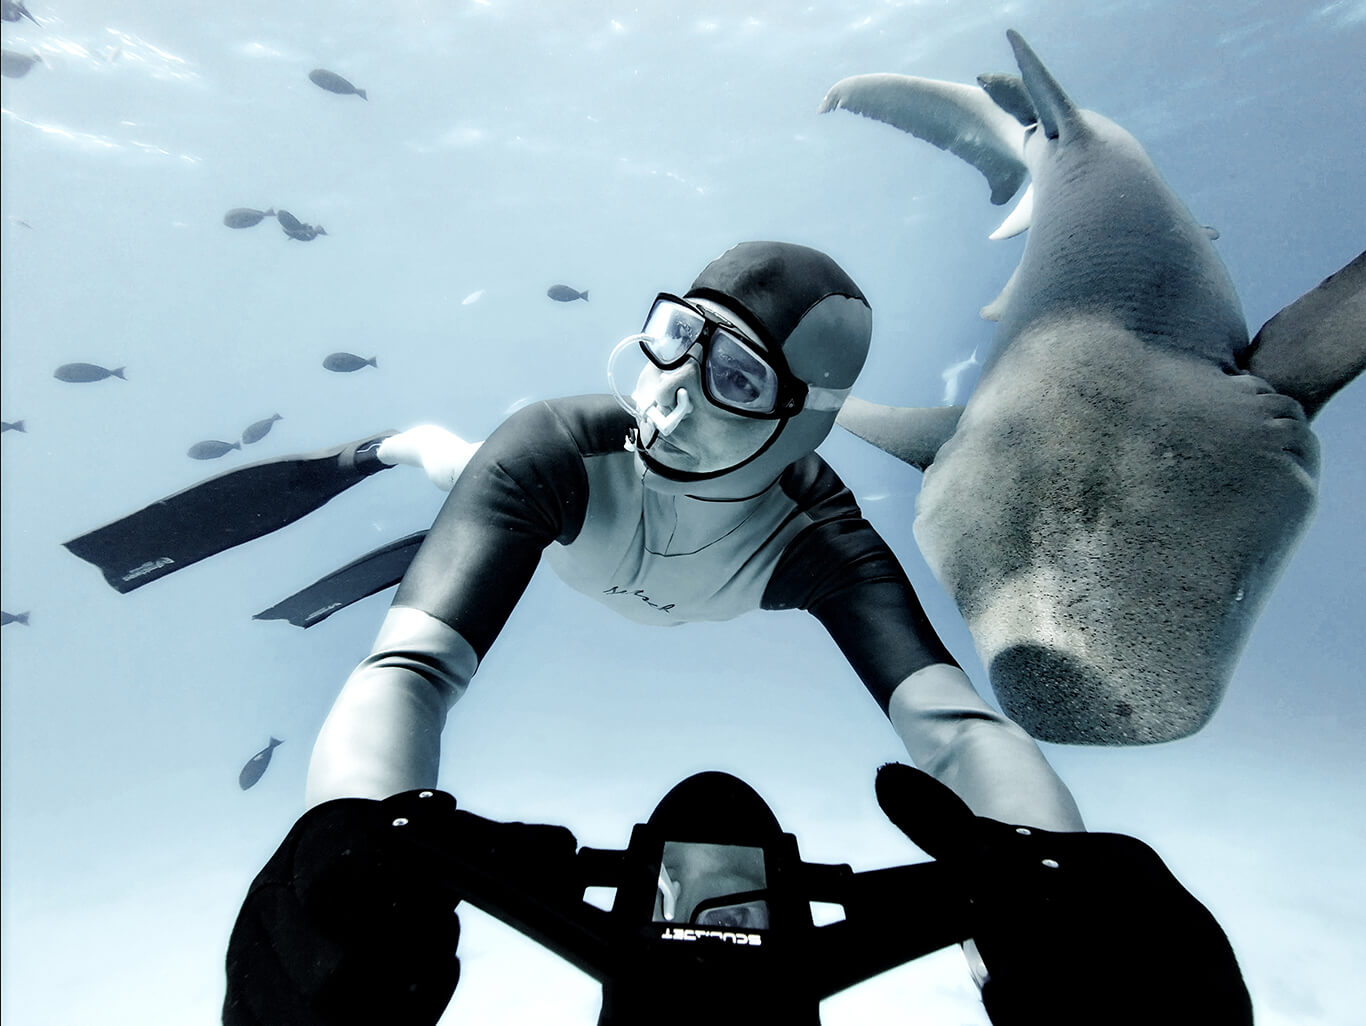 https://www.scubajet.com/media/%C2%A9SCUBAJET-ambassador-Herbert-Nitsch-Freediving-on-the-Maldives-1.jpg